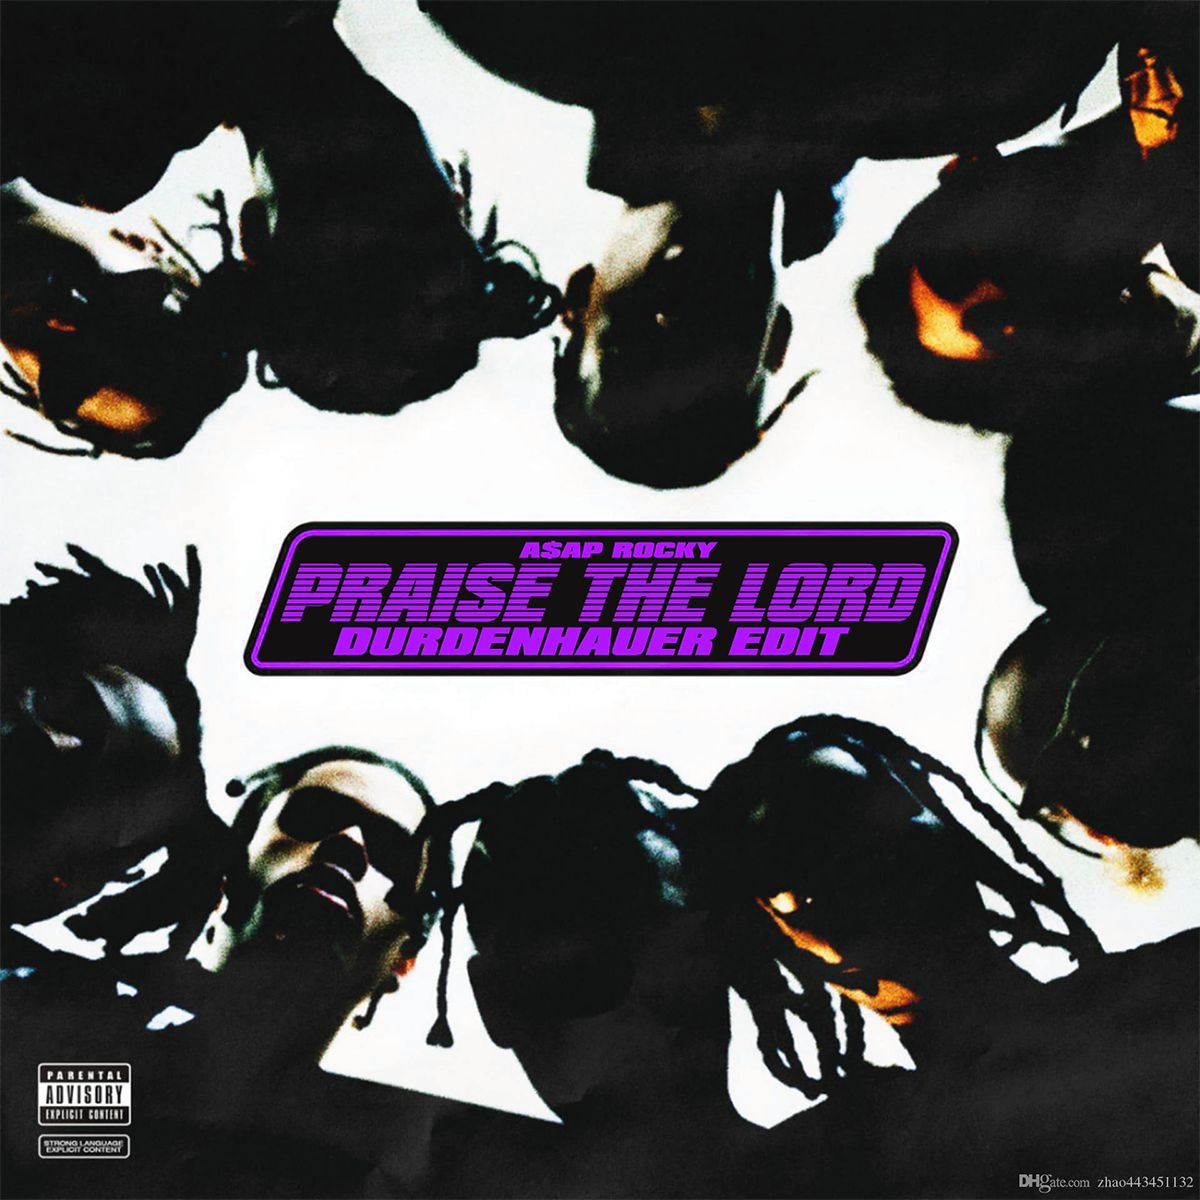 Landa A$AP ROCKY - Praise the Lord (DURDENHAUER Edit) [FREE DOWNLOAD]